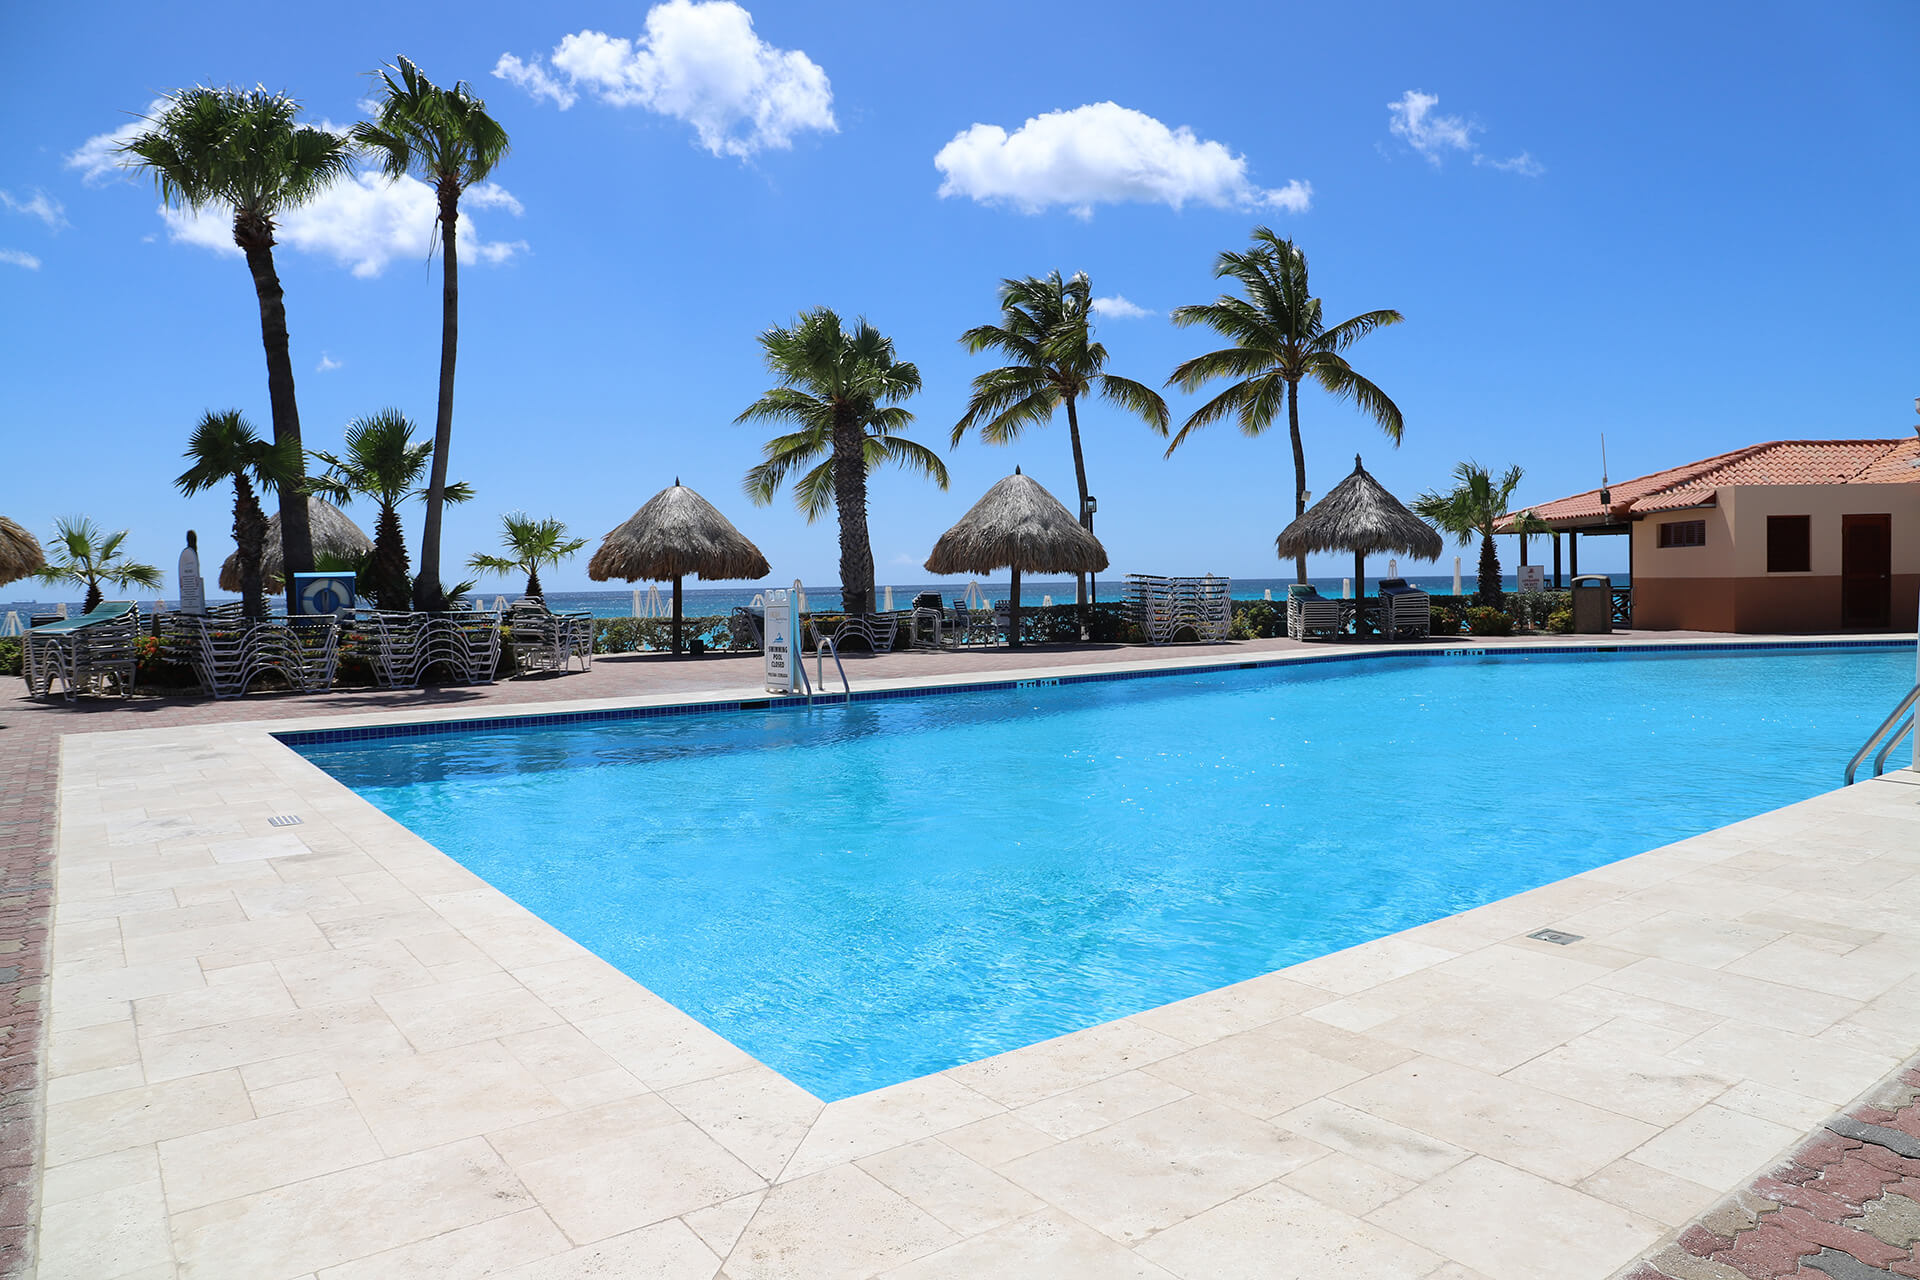 Gallery Aruba Beach Club Resort - The Aruba Beach Club Resort